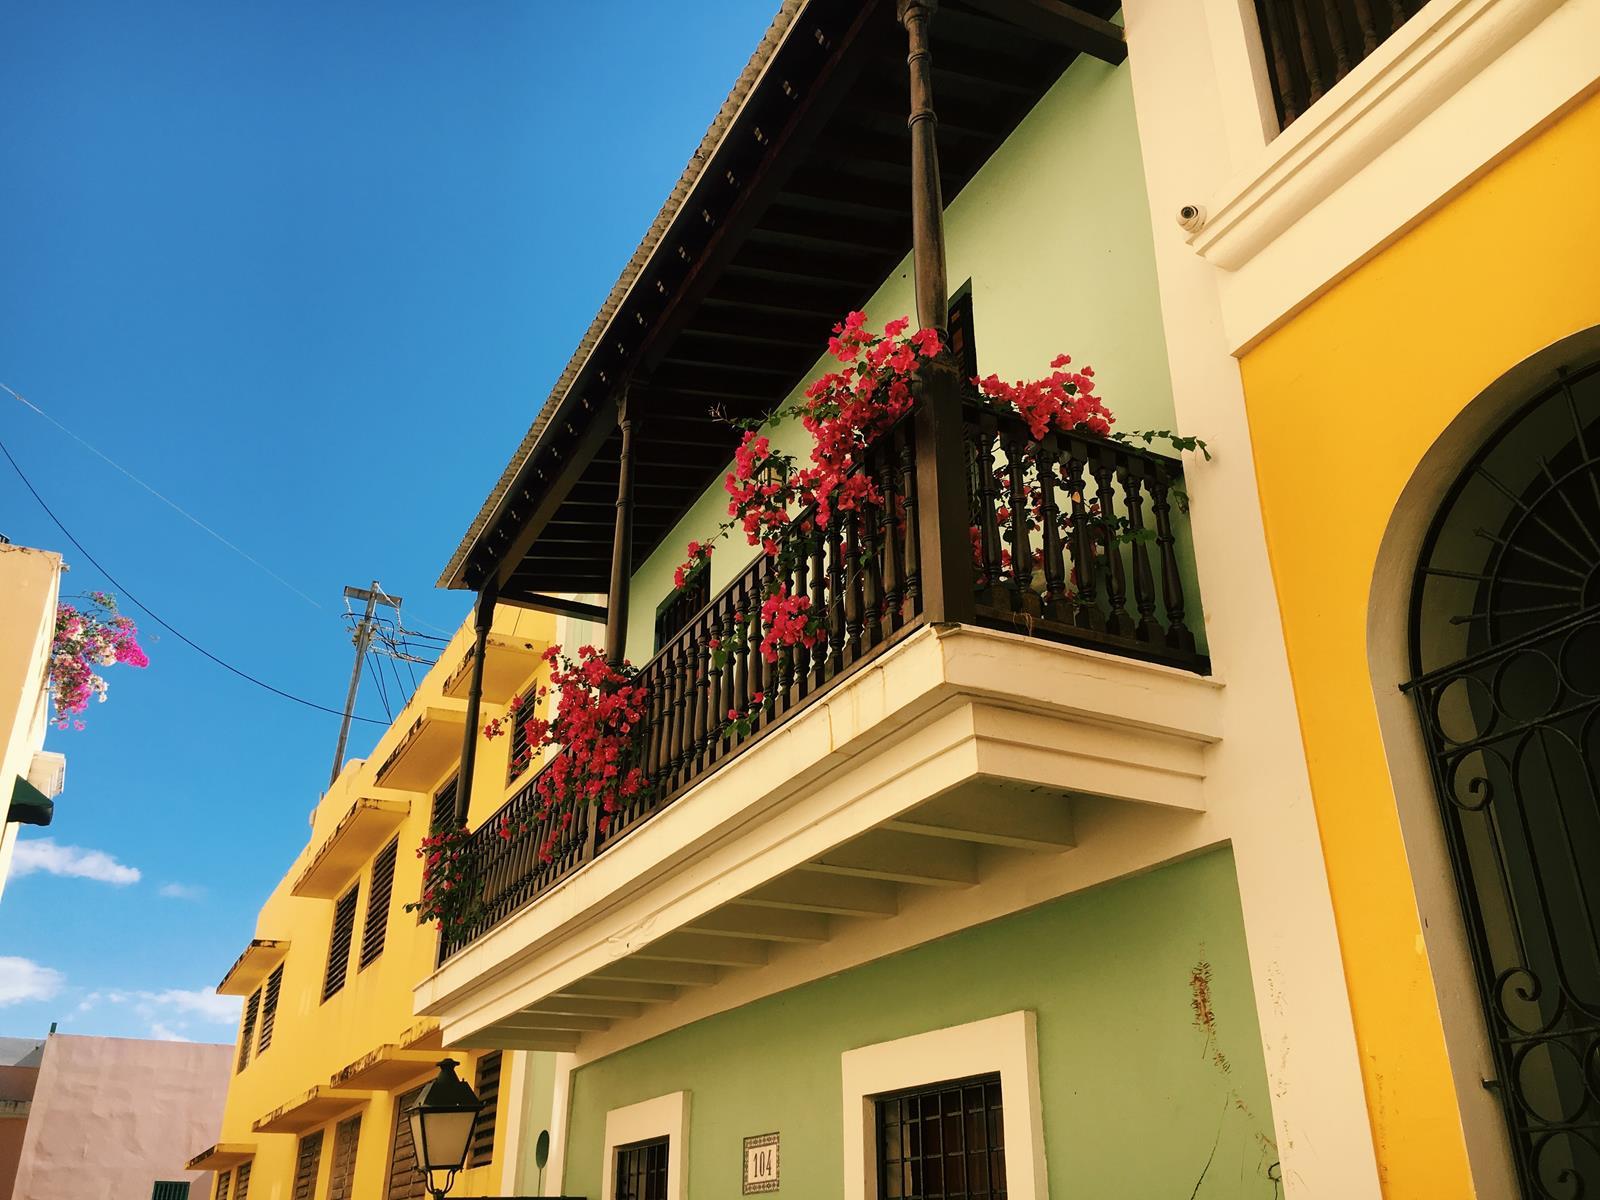 Exploring the Streets of Old San Juan